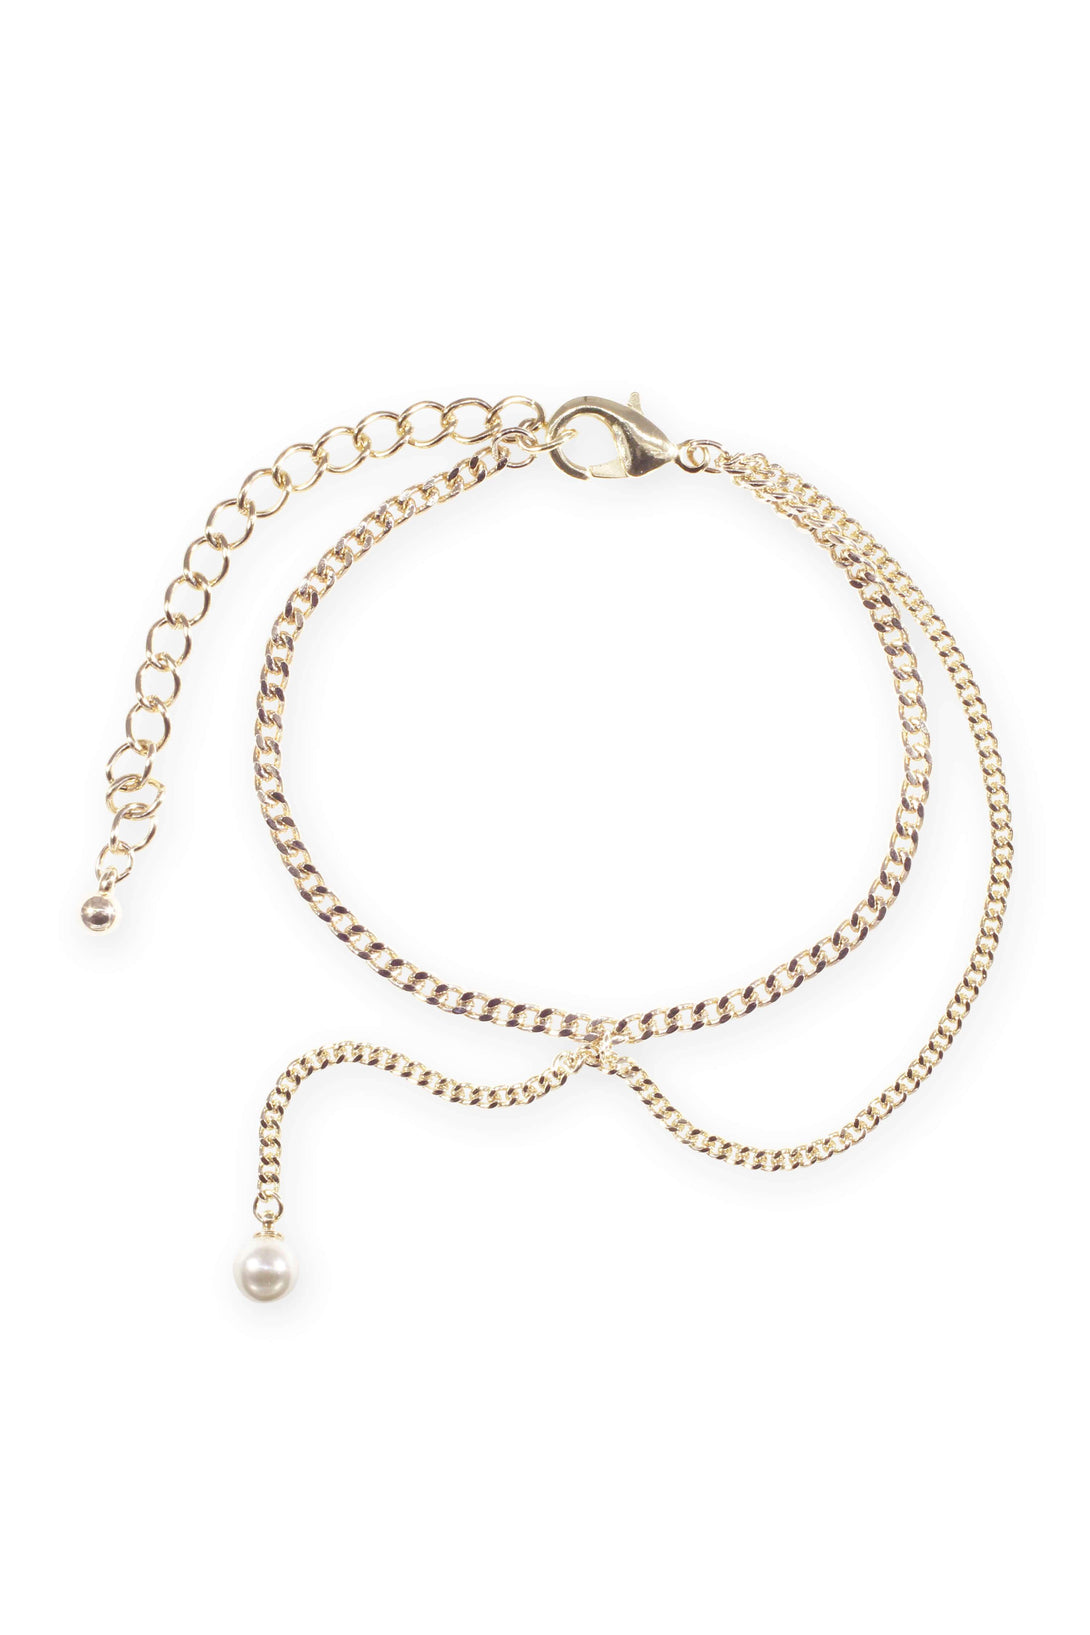 Spotless White Pearl Clasp Bracelet